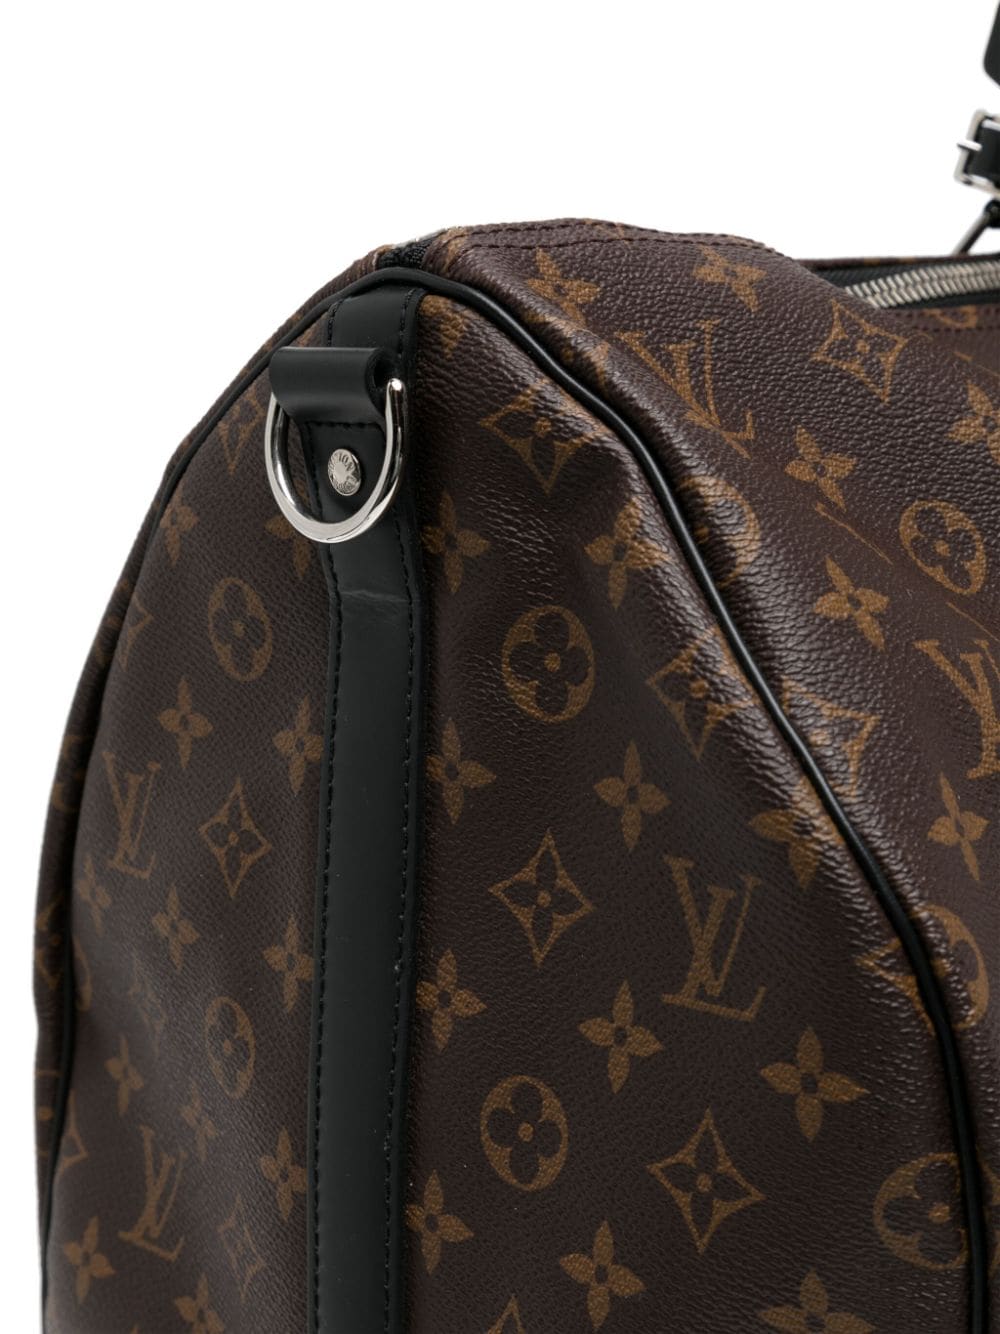 Louis Vuitton pre-owned Keepall 55 Travel Bag - Farfetch